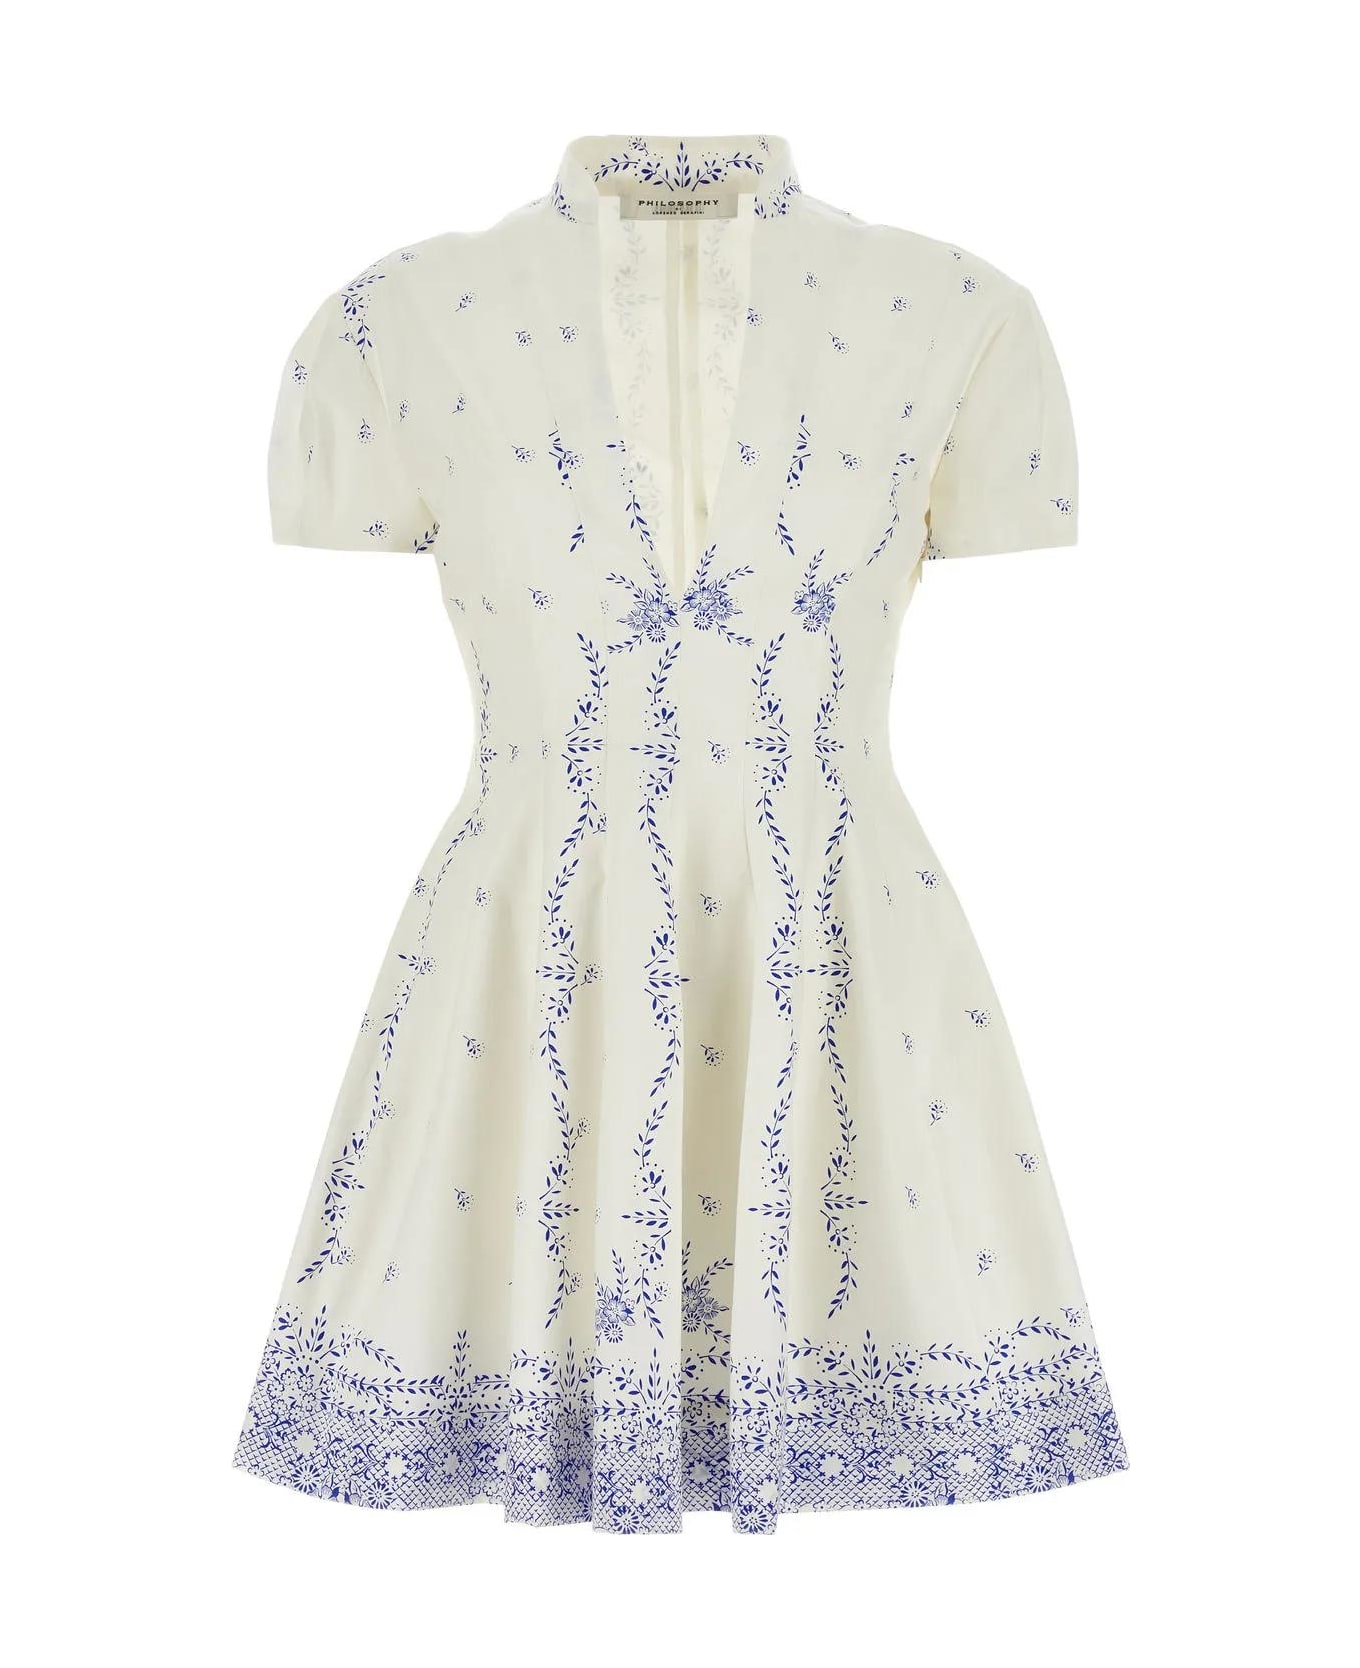 Philosophy di Lorenzo Serafini Printed Cotton Mini Dress - Bianco/azzurro